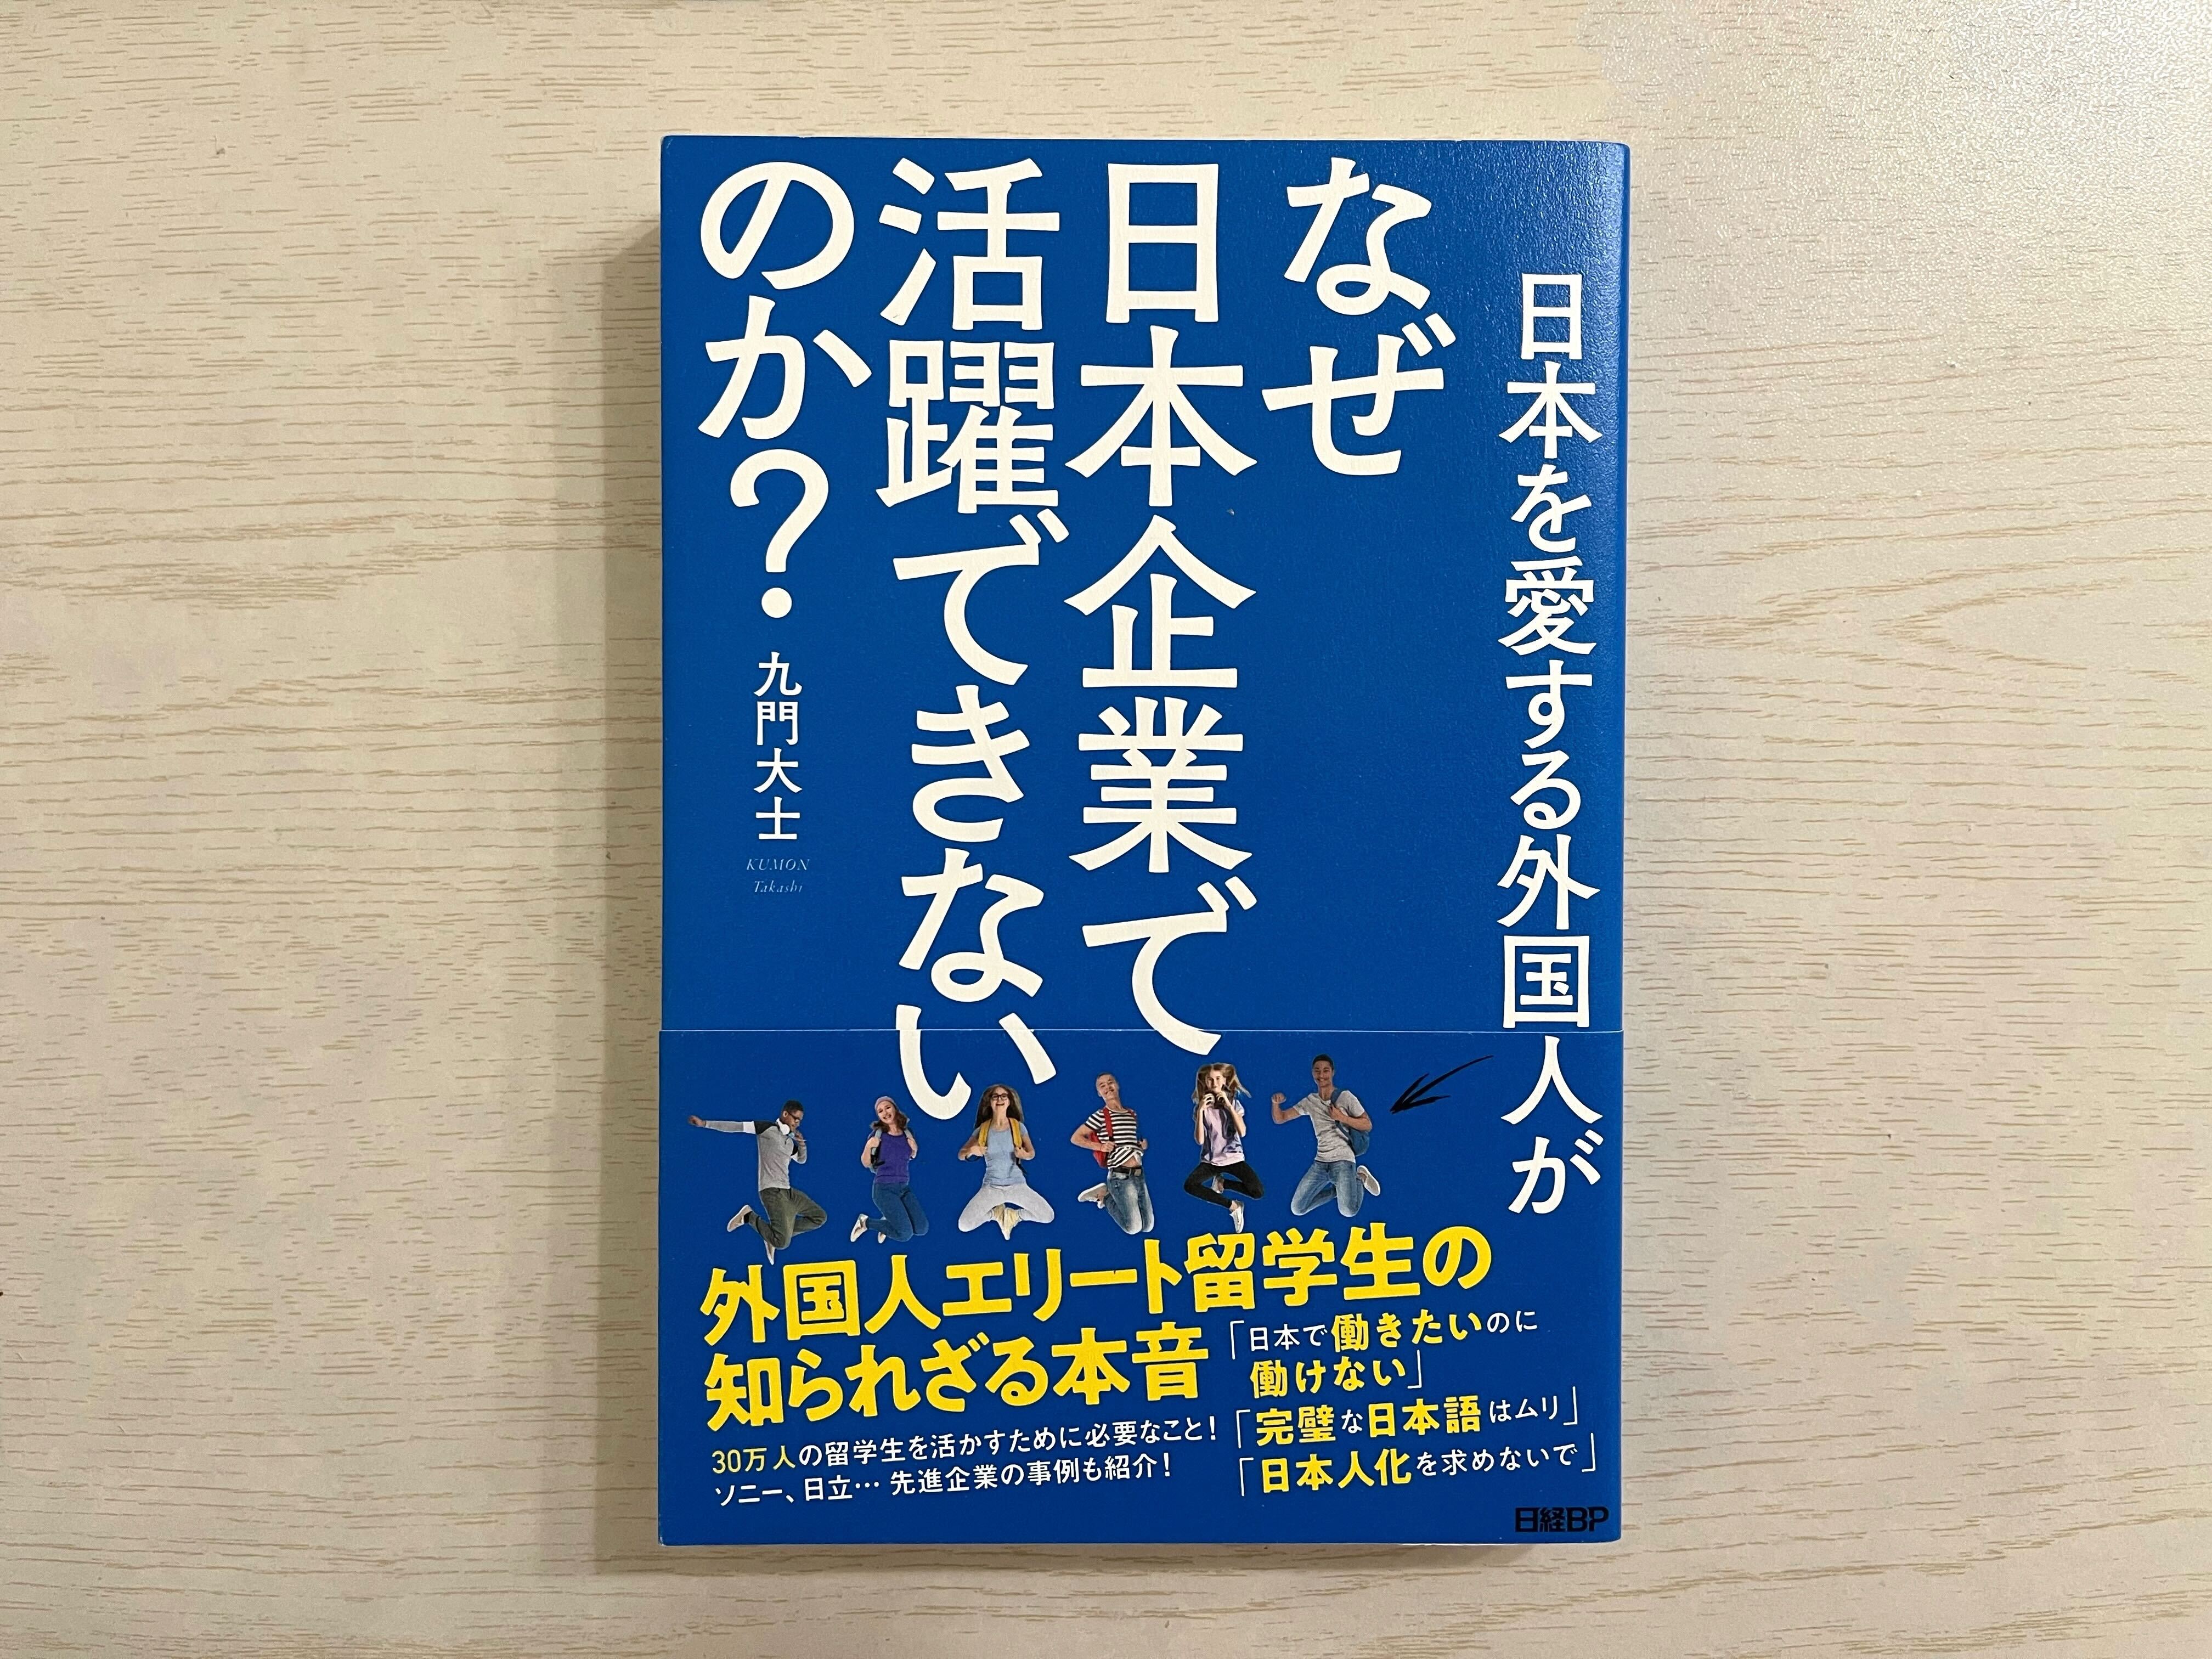 Takahashi's book in Japanese